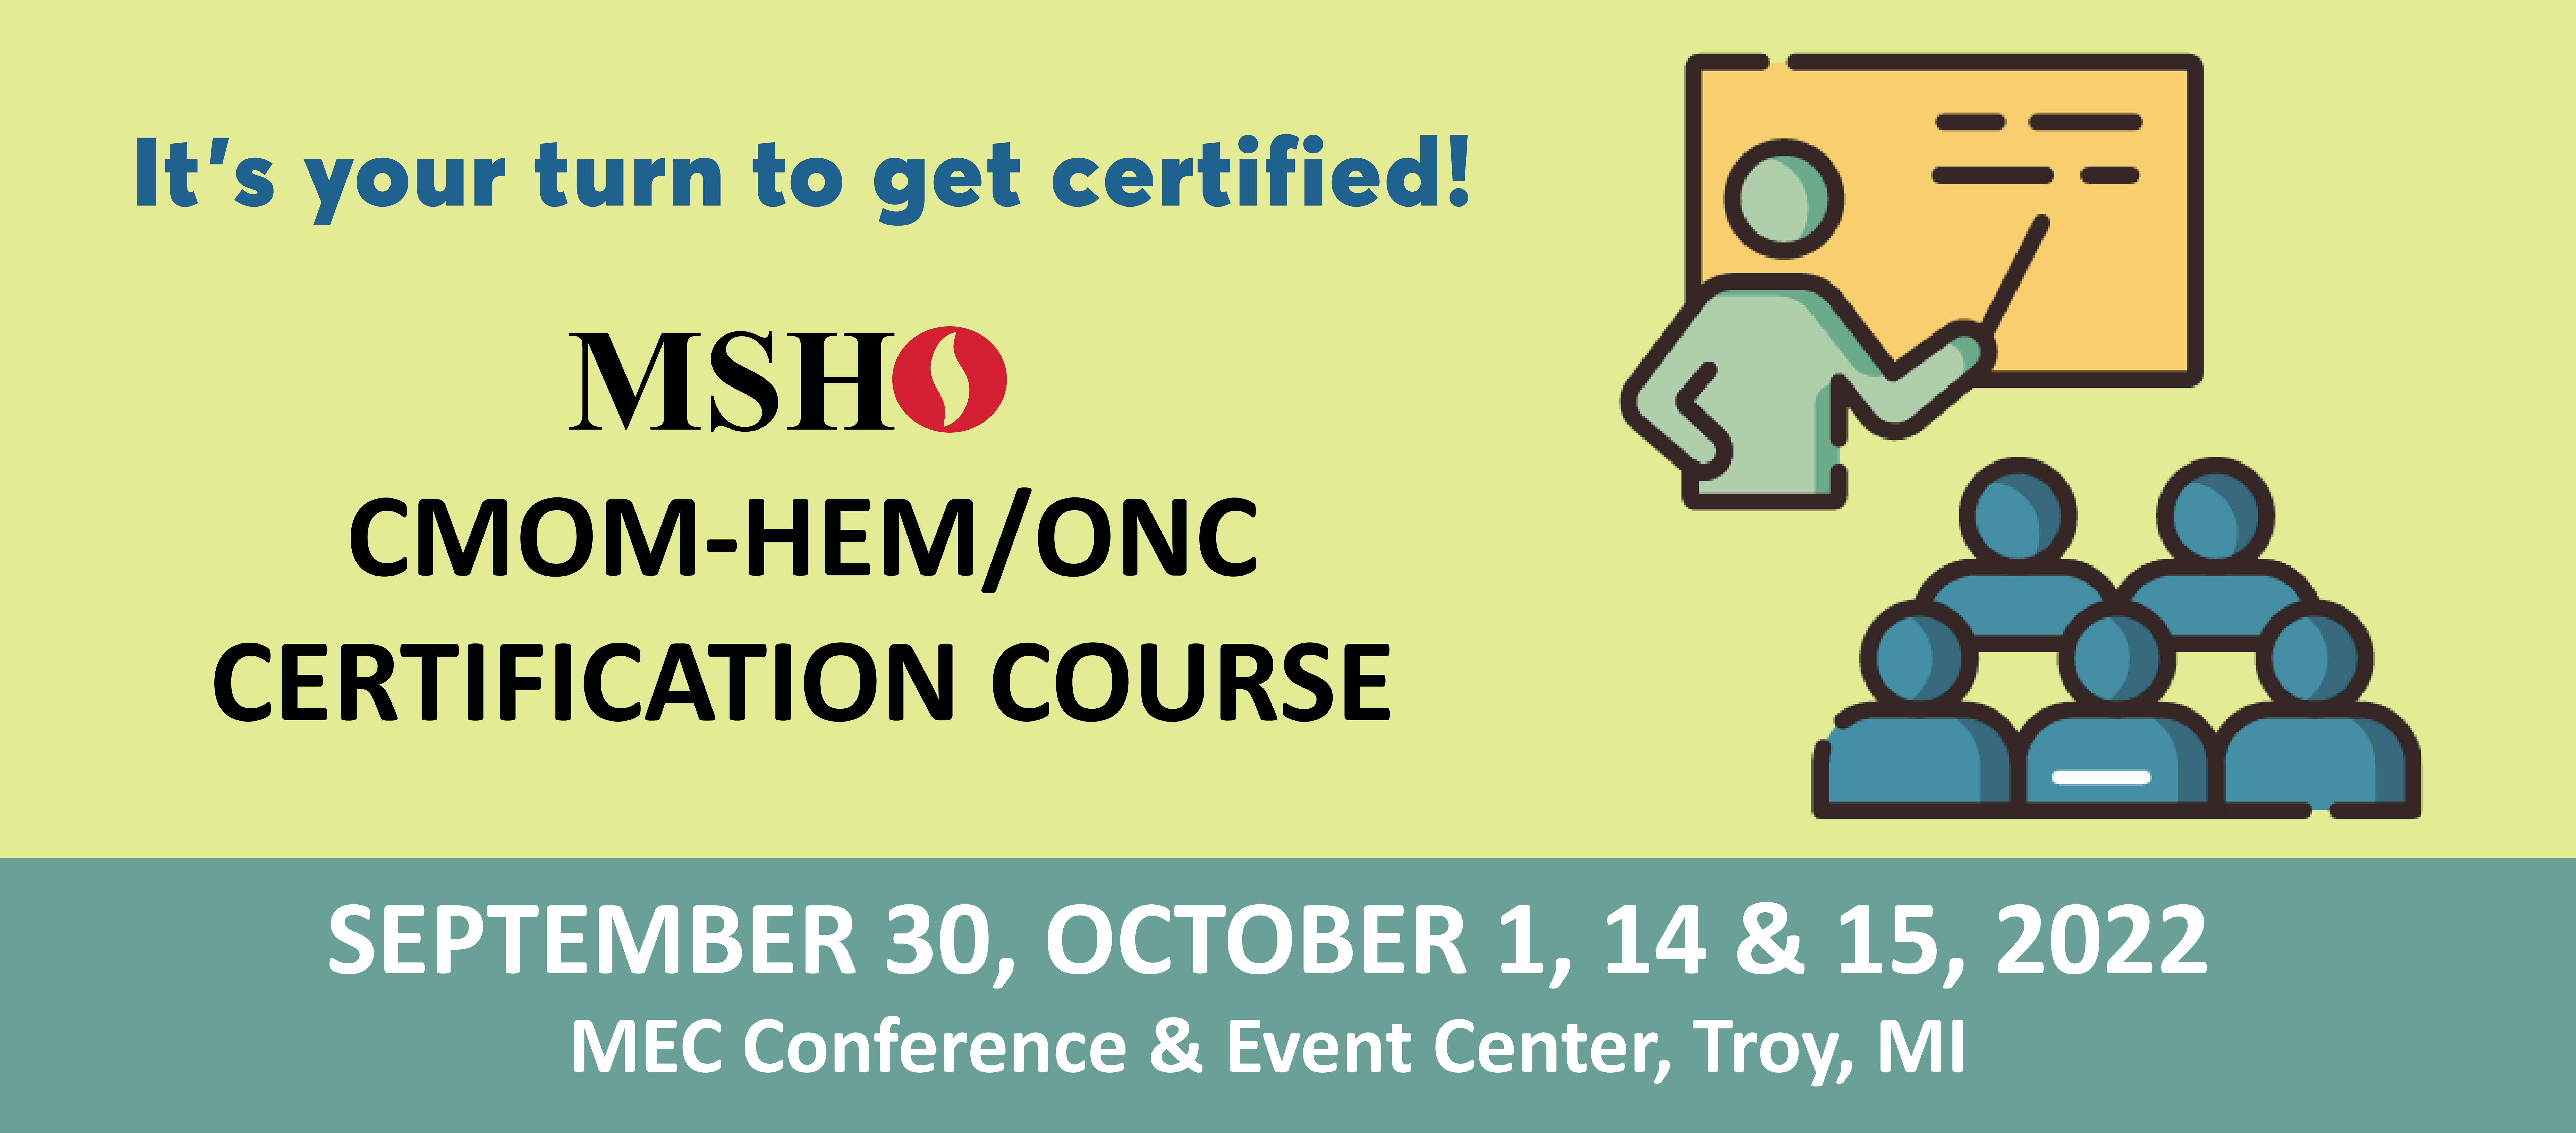 CMOM-HEM/ONC Certification Course